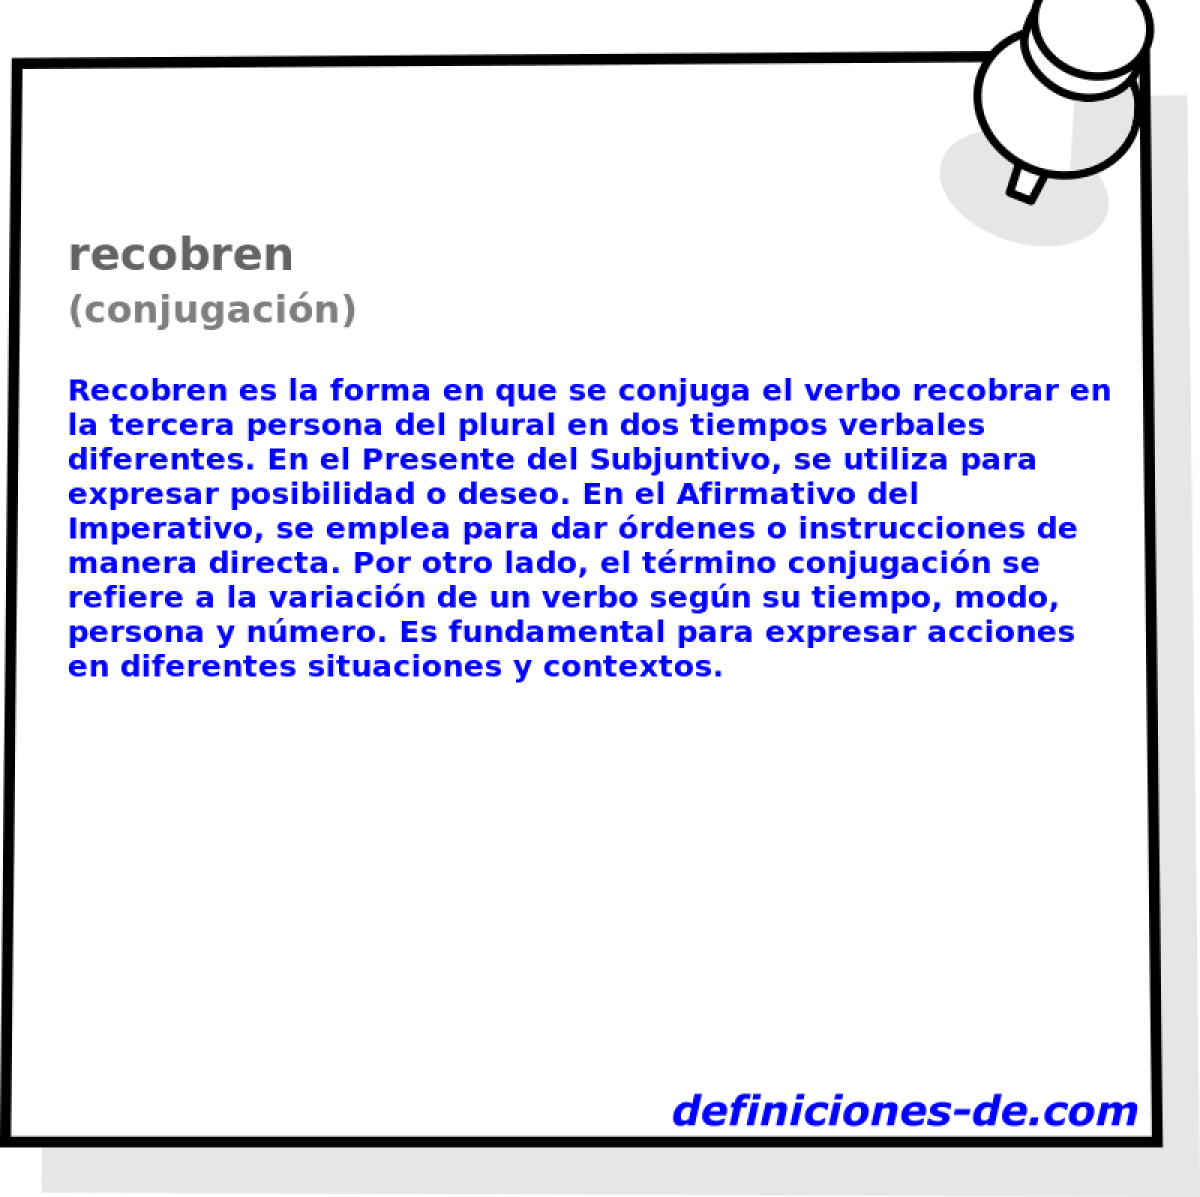 recobren (conjugacin)